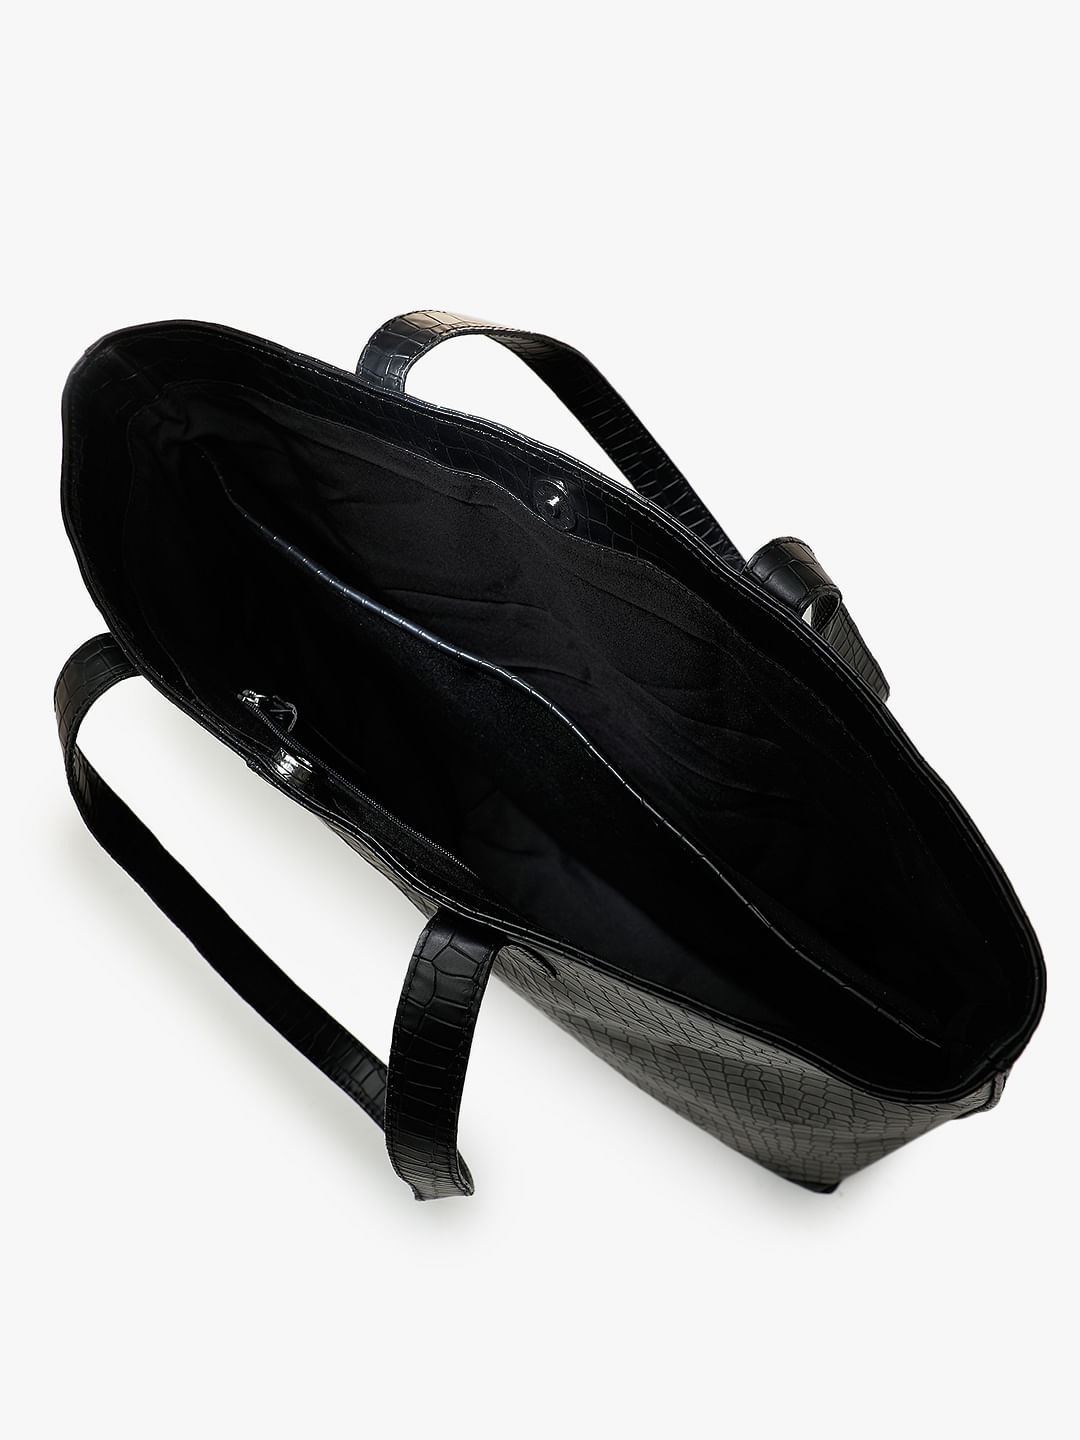 Brighton Handbag Shoulder Purse Black Croc Flat Bottom￼ Leather Small Mag  Zip | eBay